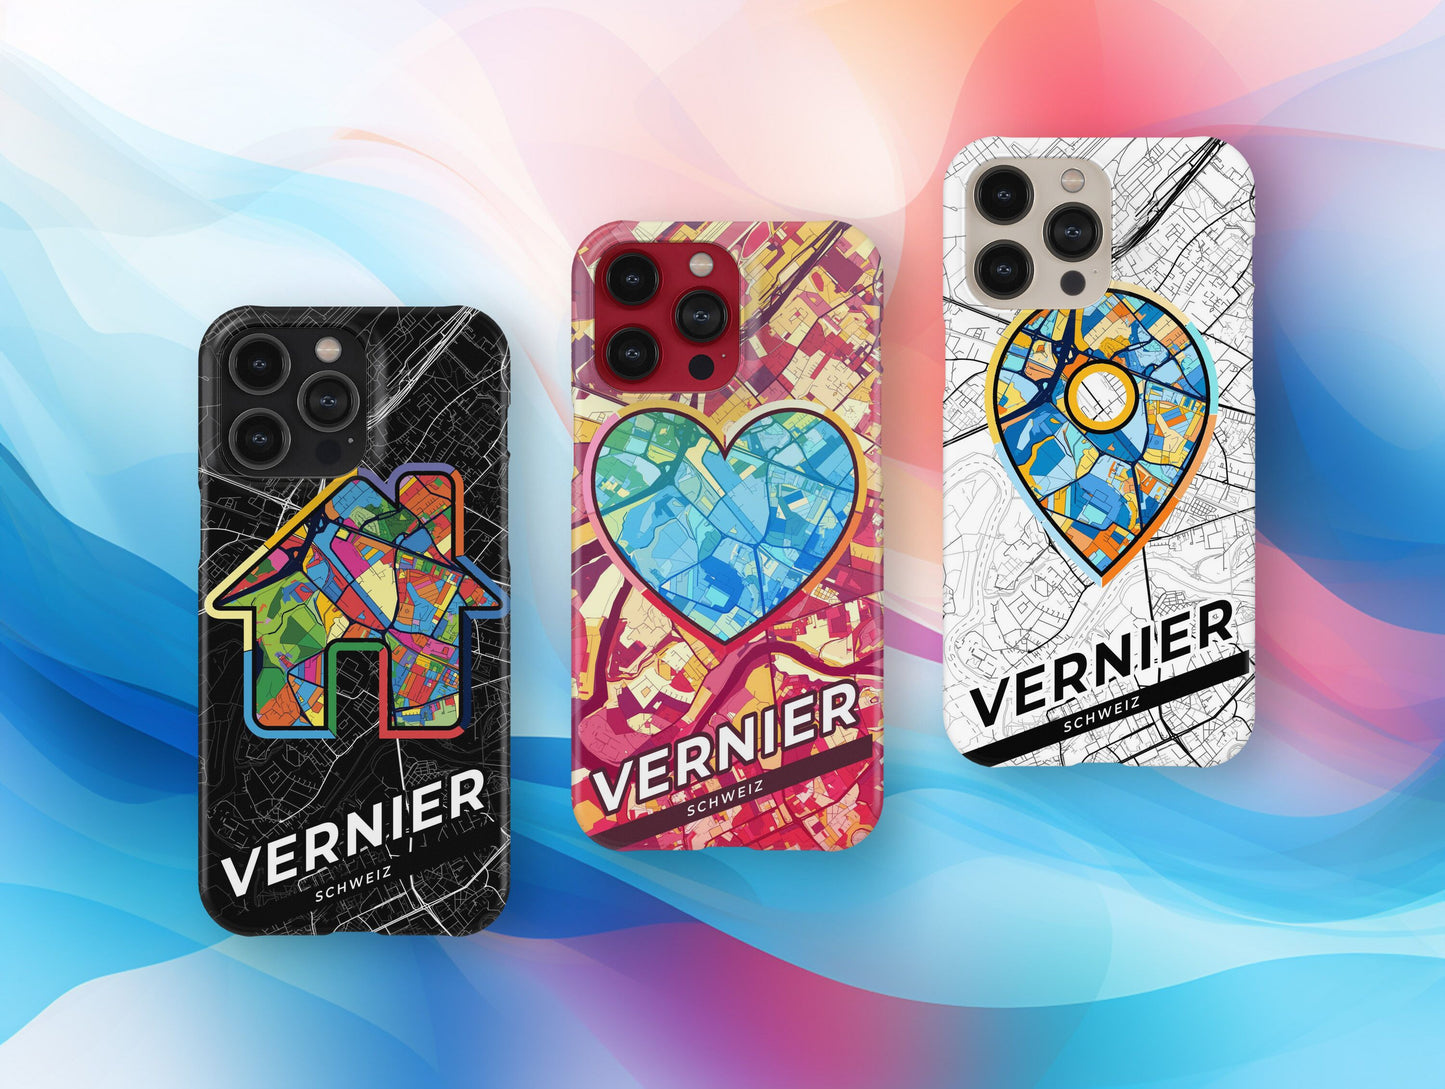 Vernier Switzerland slim phone case with colorful icon